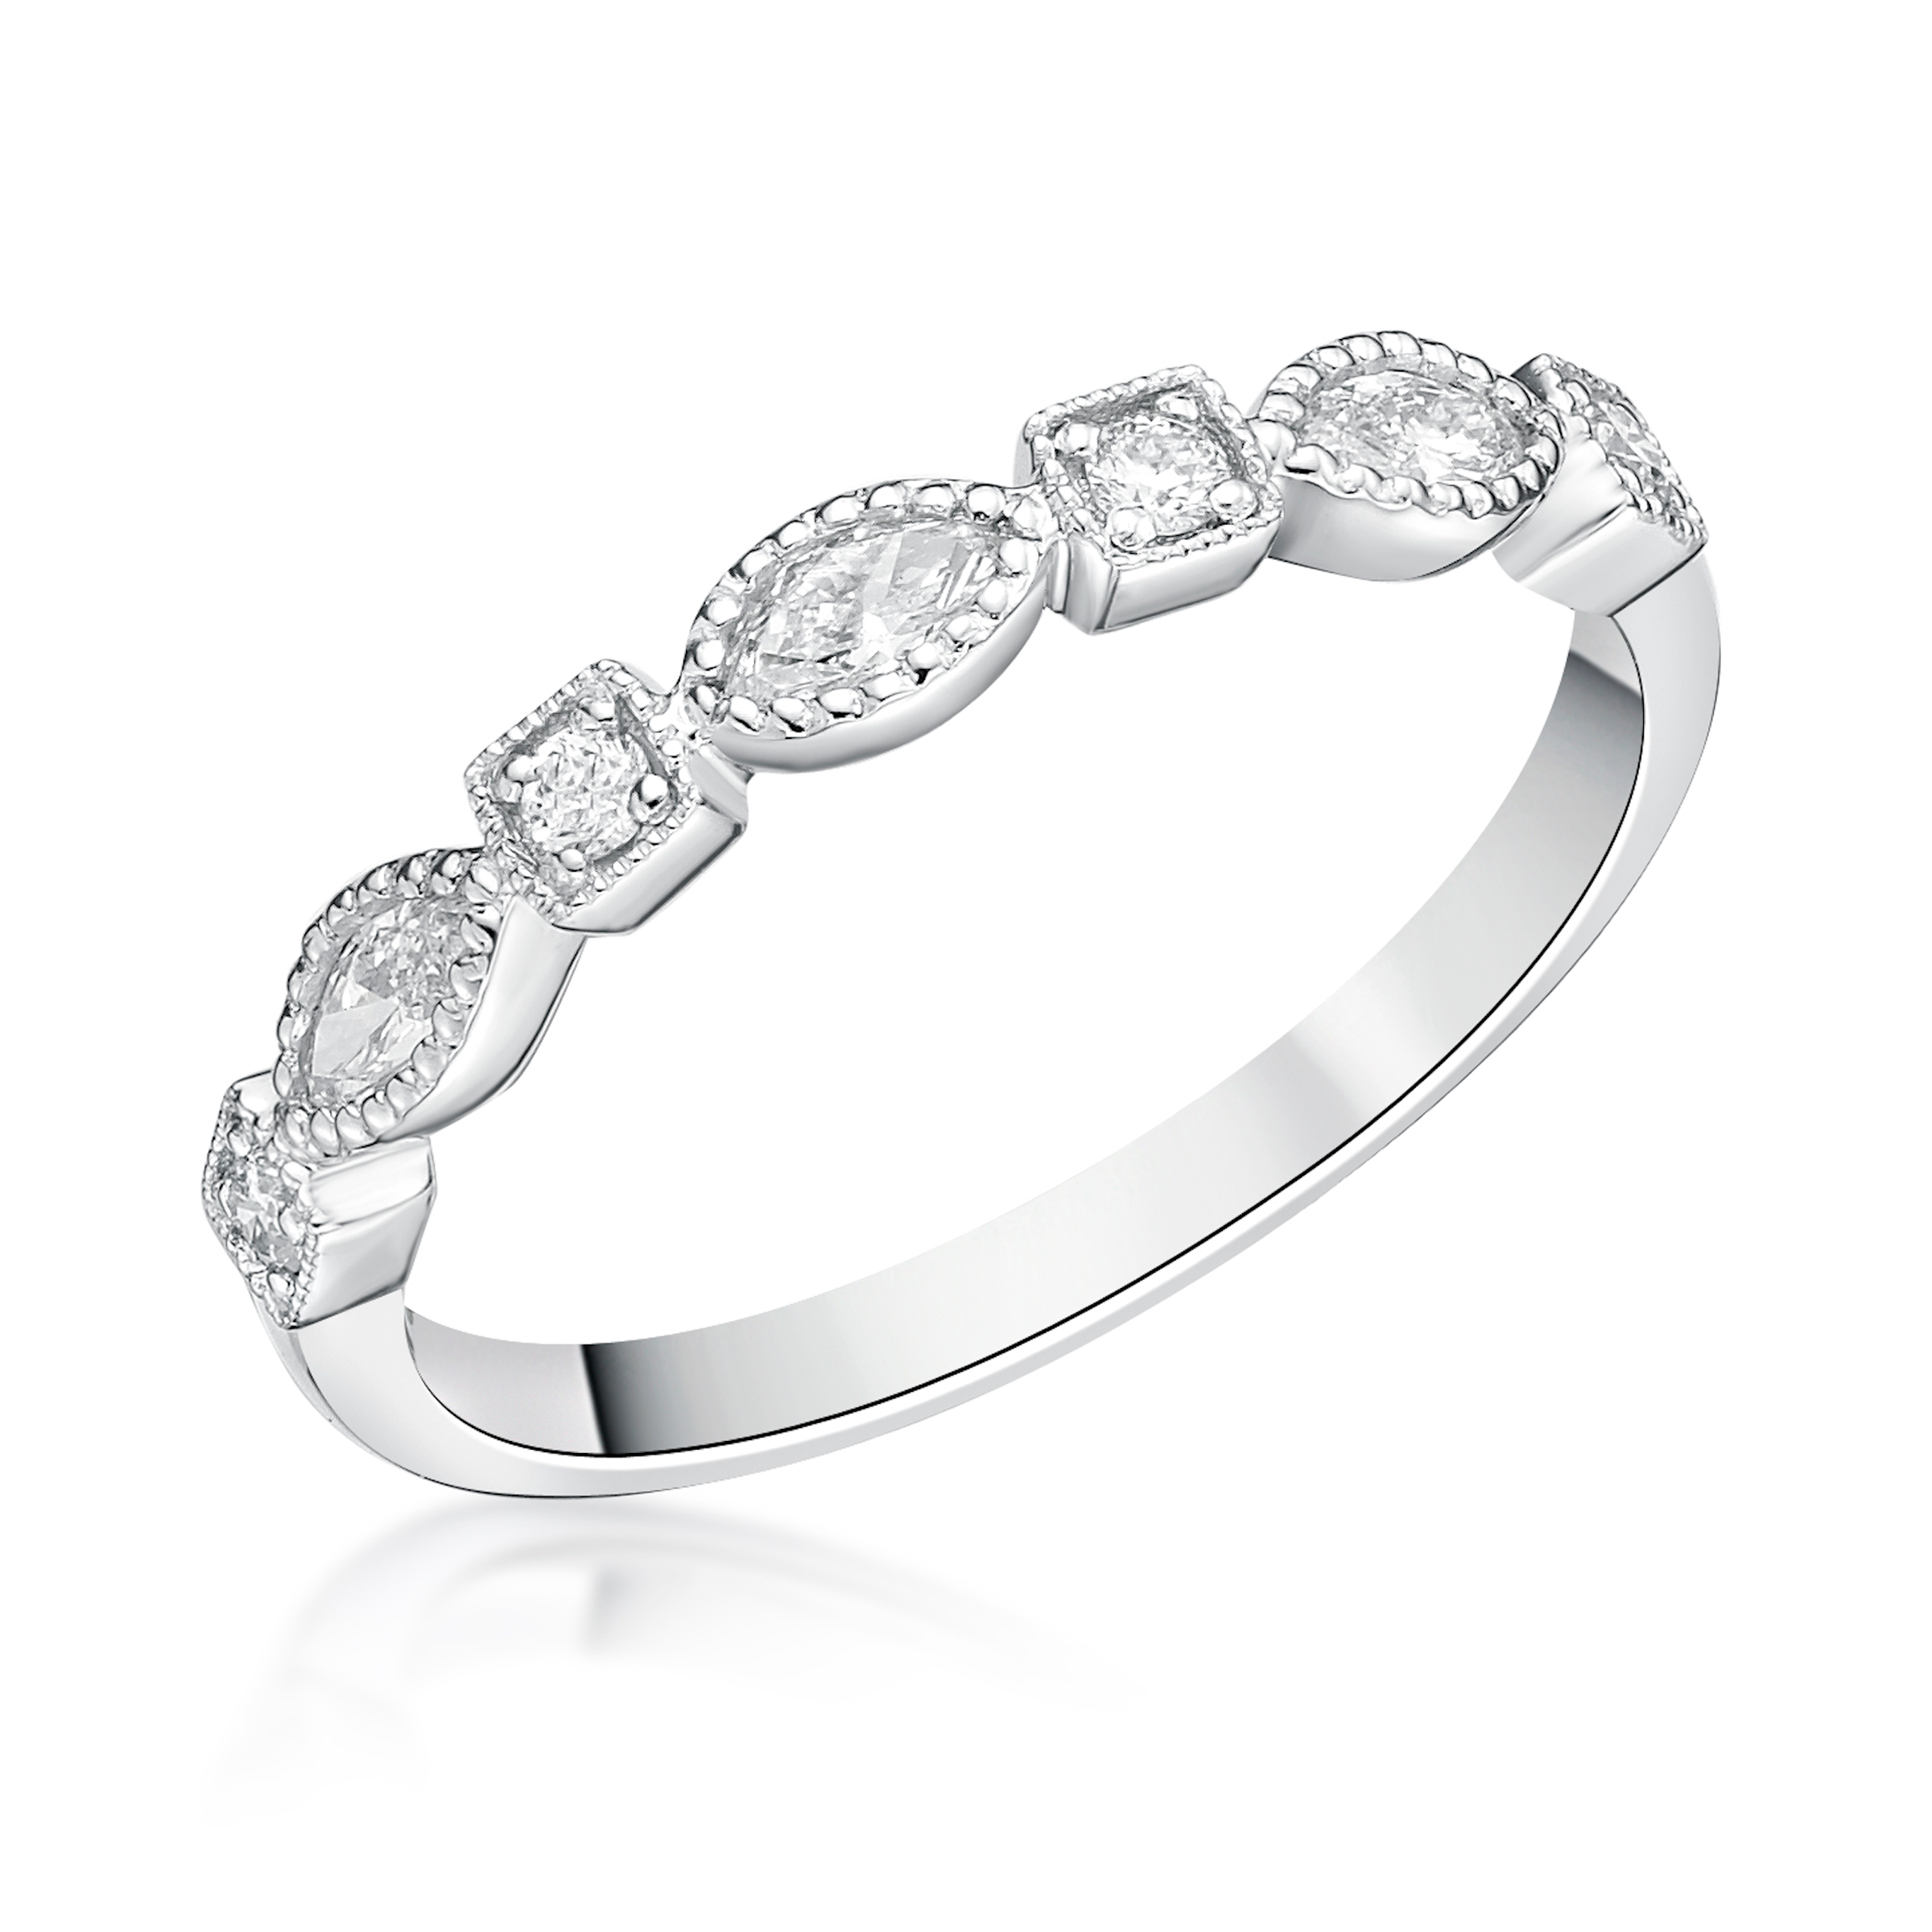 VINTAGE INSPIRED MIXED CUT DIAMOND WEDDING ETERNITY RING